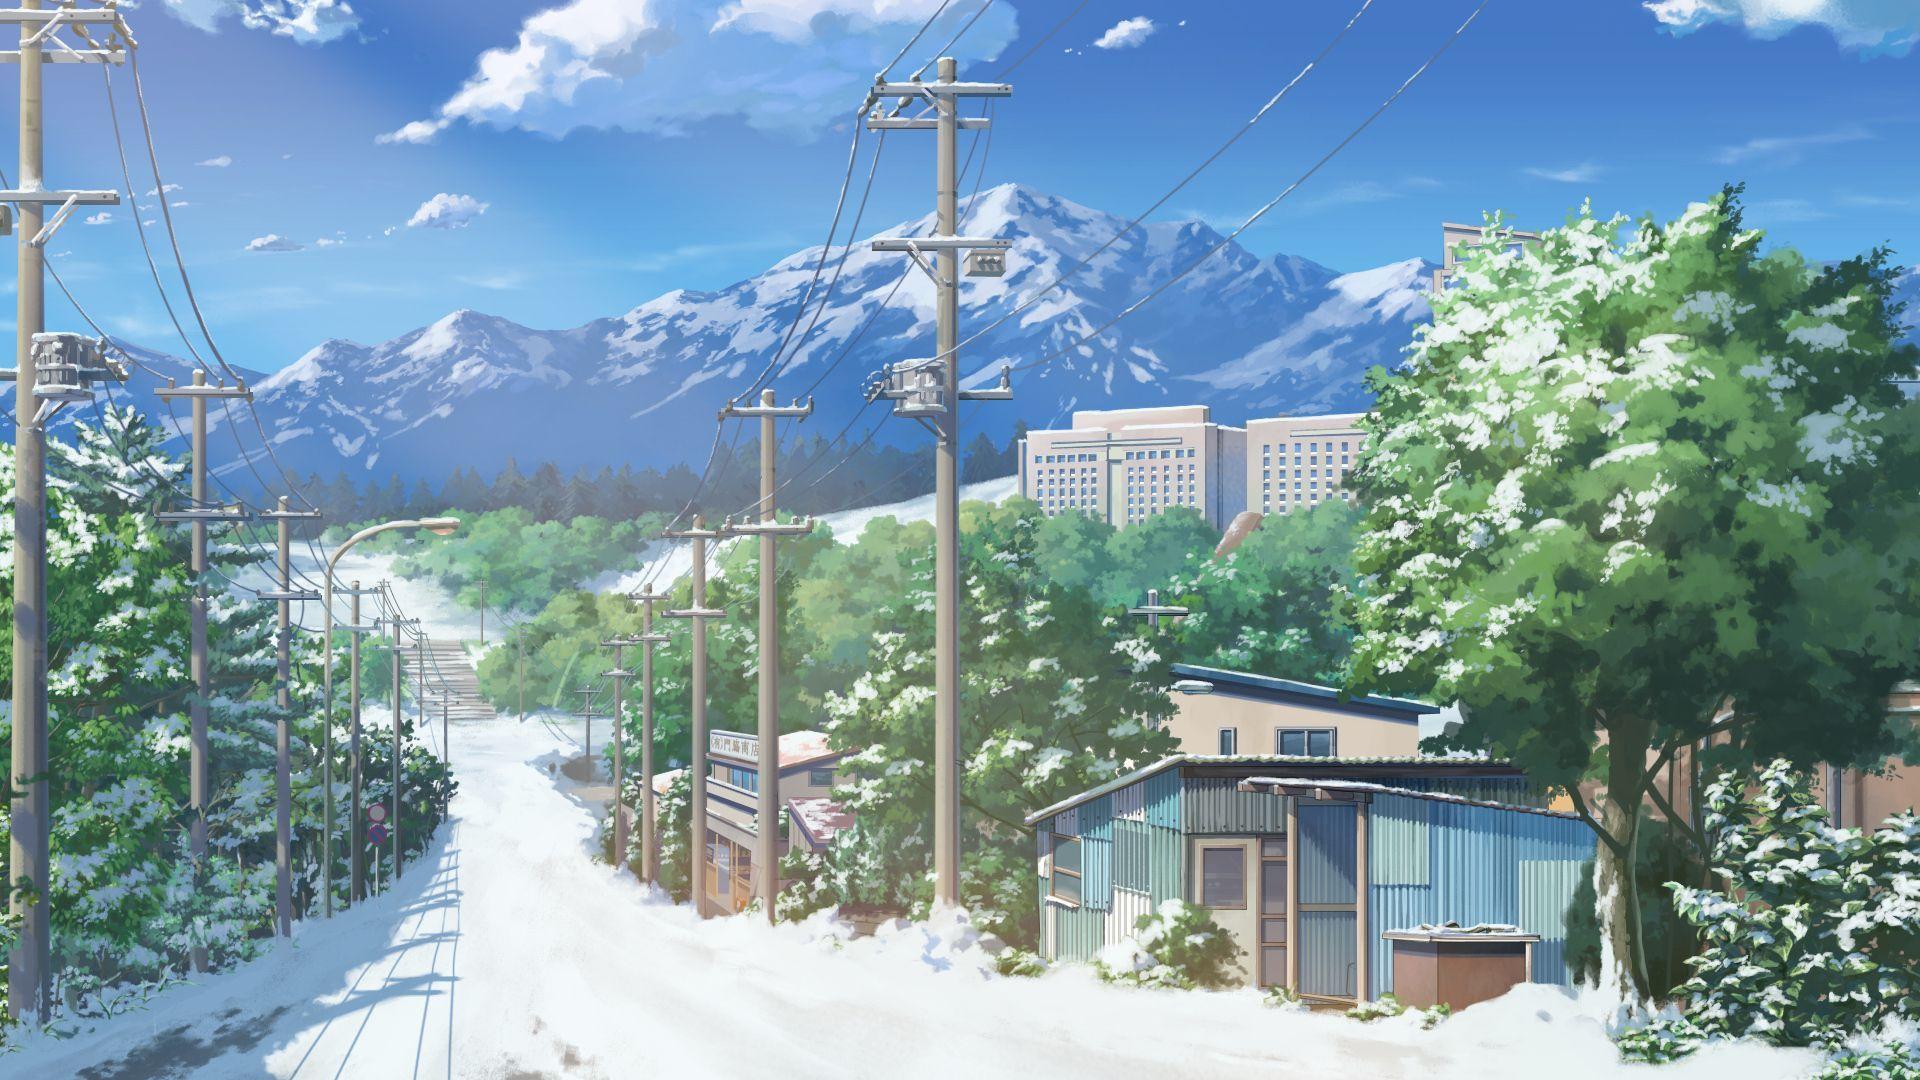 Anime Japan Cityscape HD Wallpaperx1080. Anime scenery wallpaper, Scenery wallpaper, Anime scenery